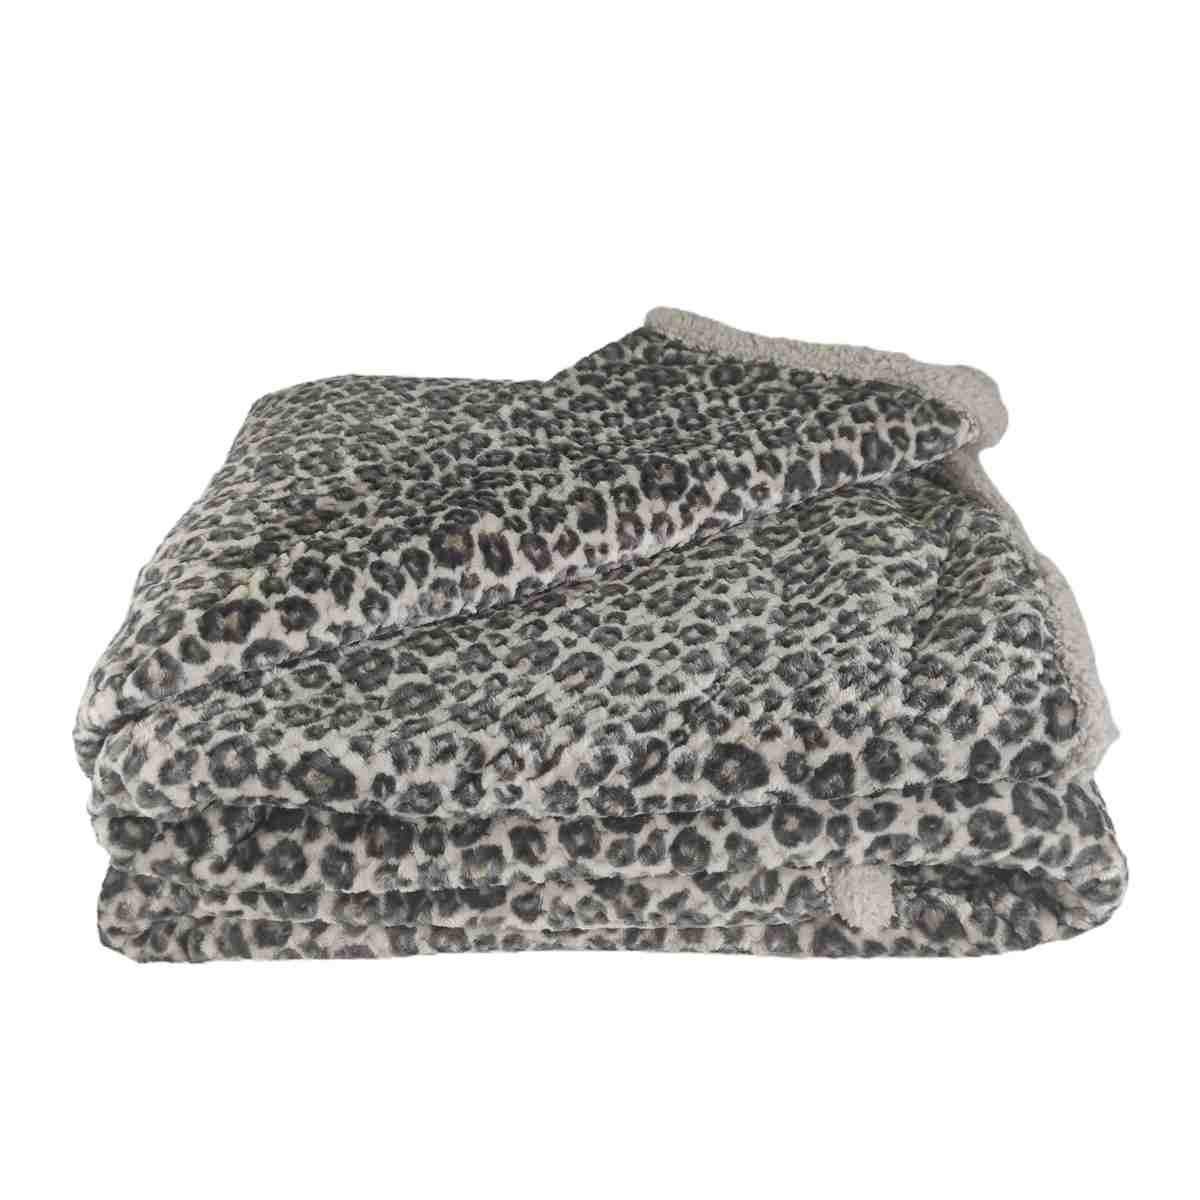 Coperta Plaid Leopard Marrone cm.130x160